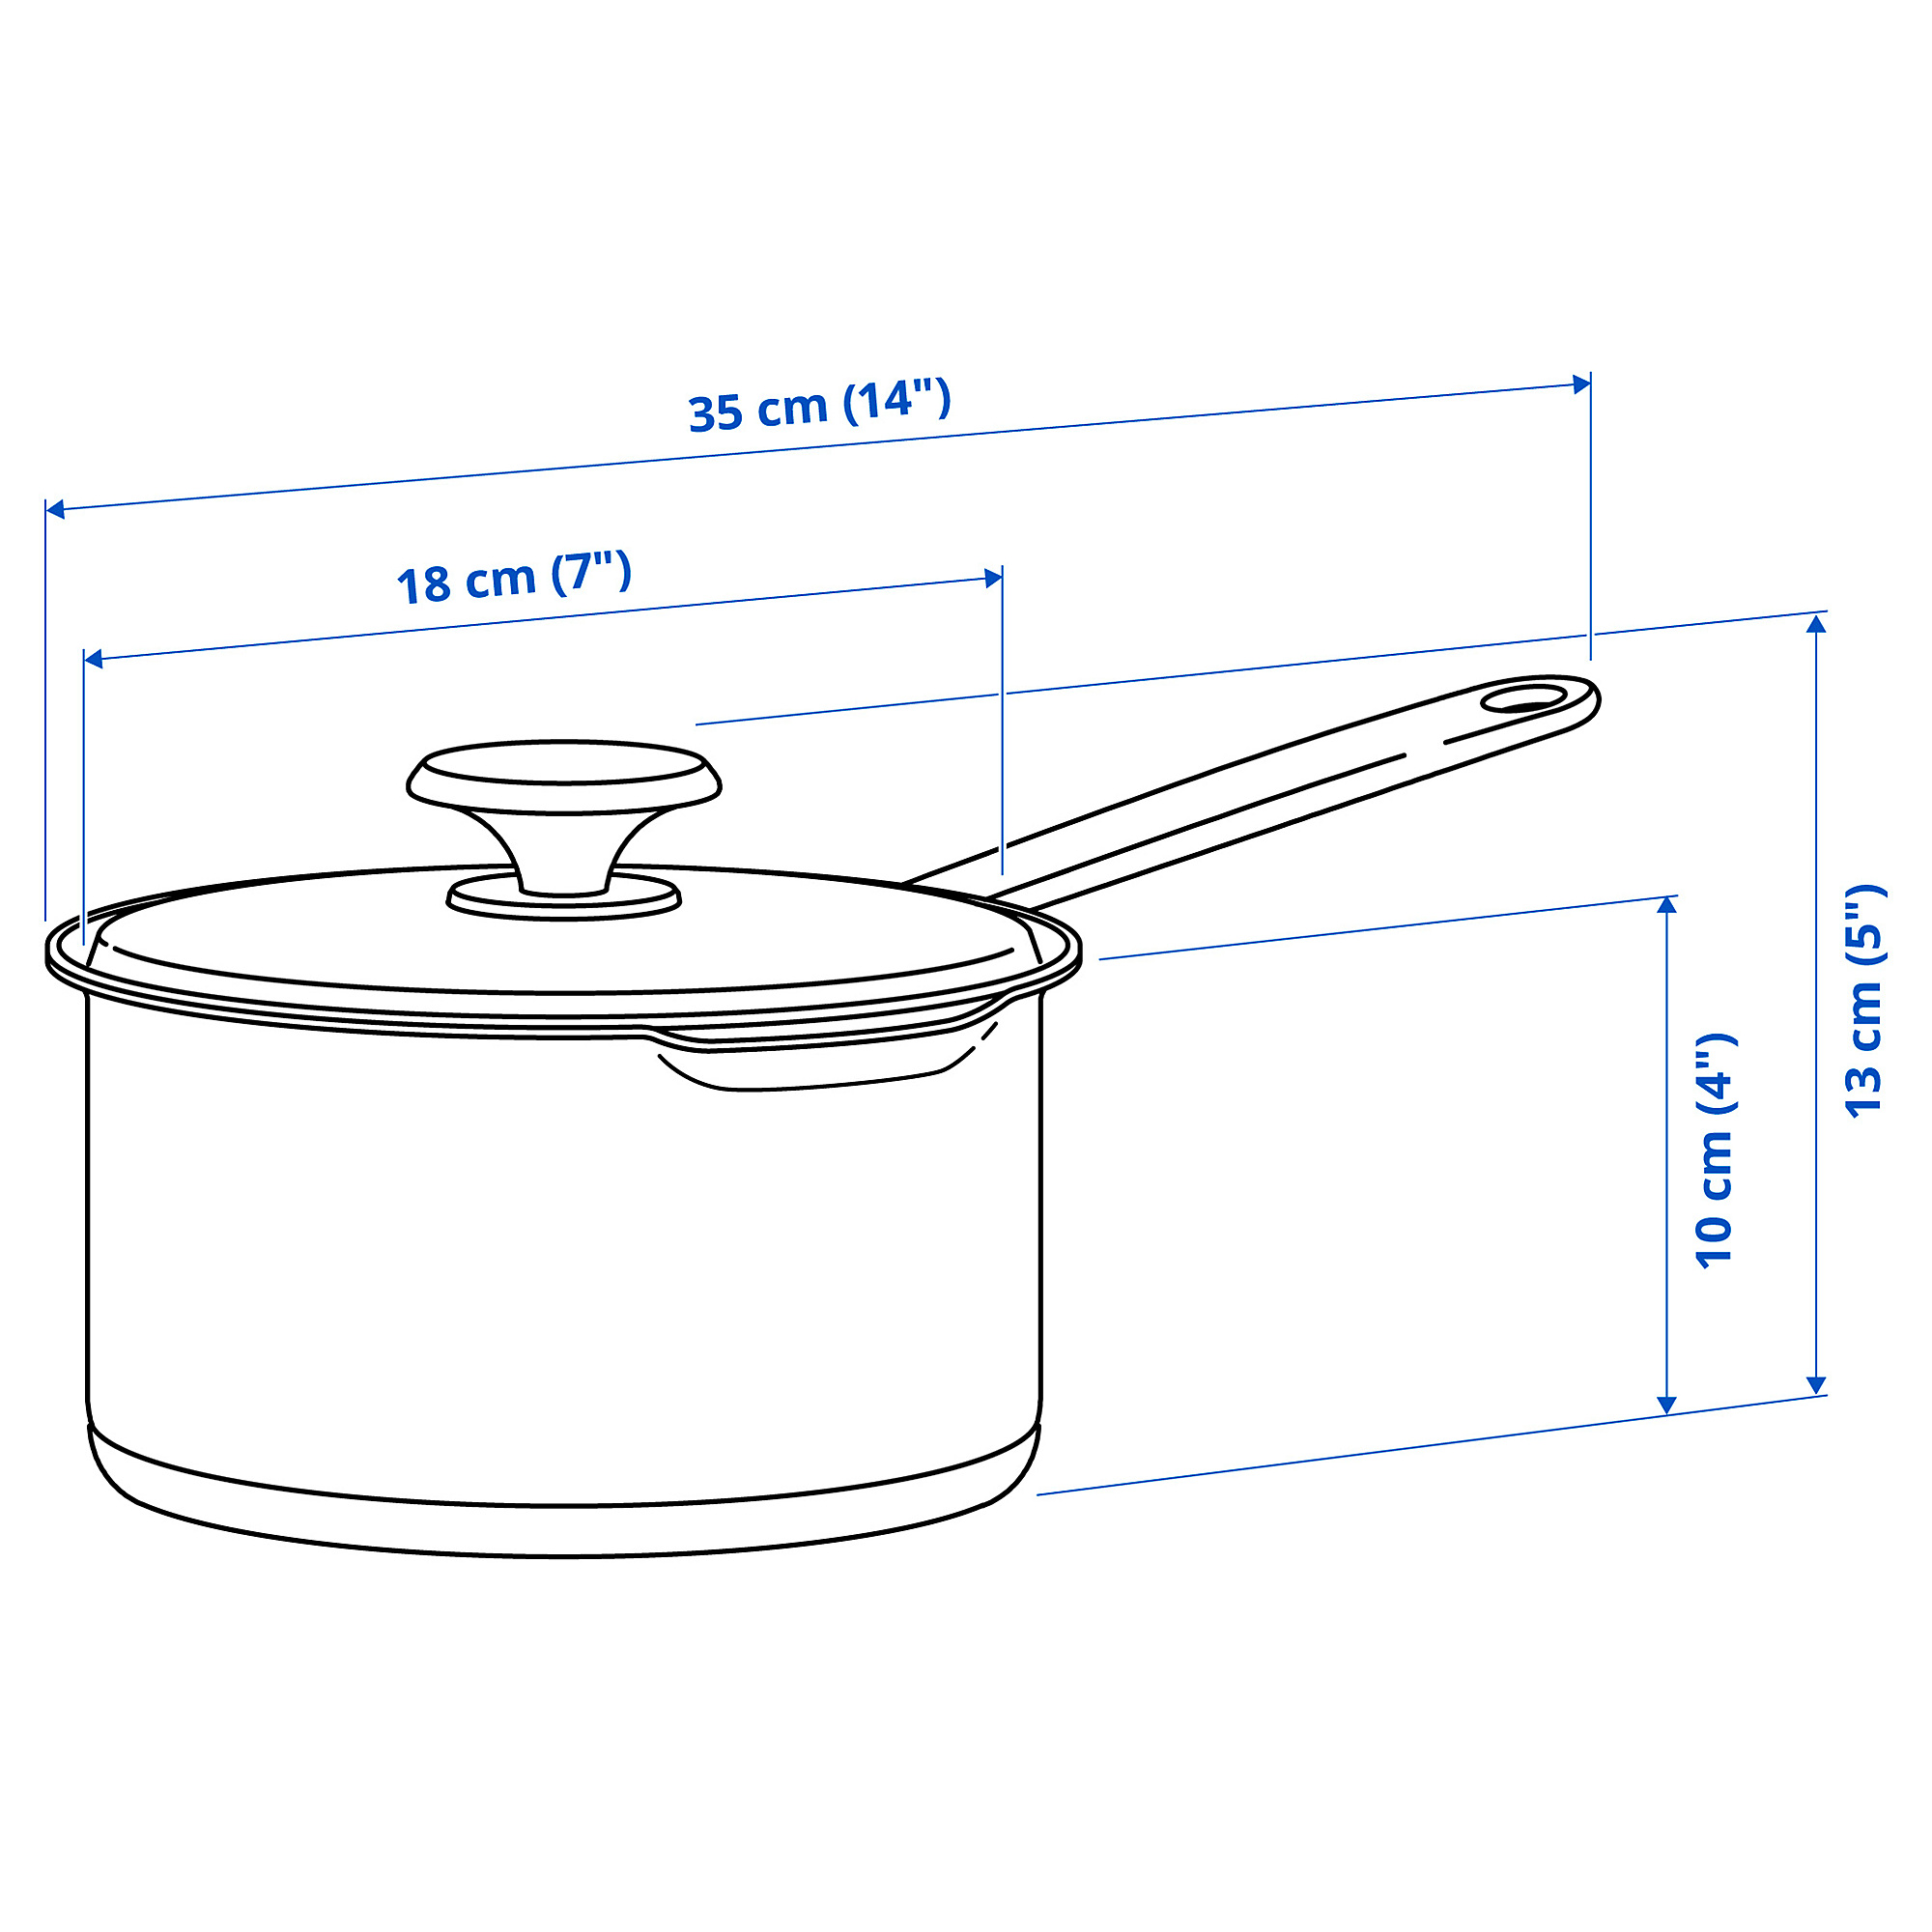 HEMKOMST saucepan with lid